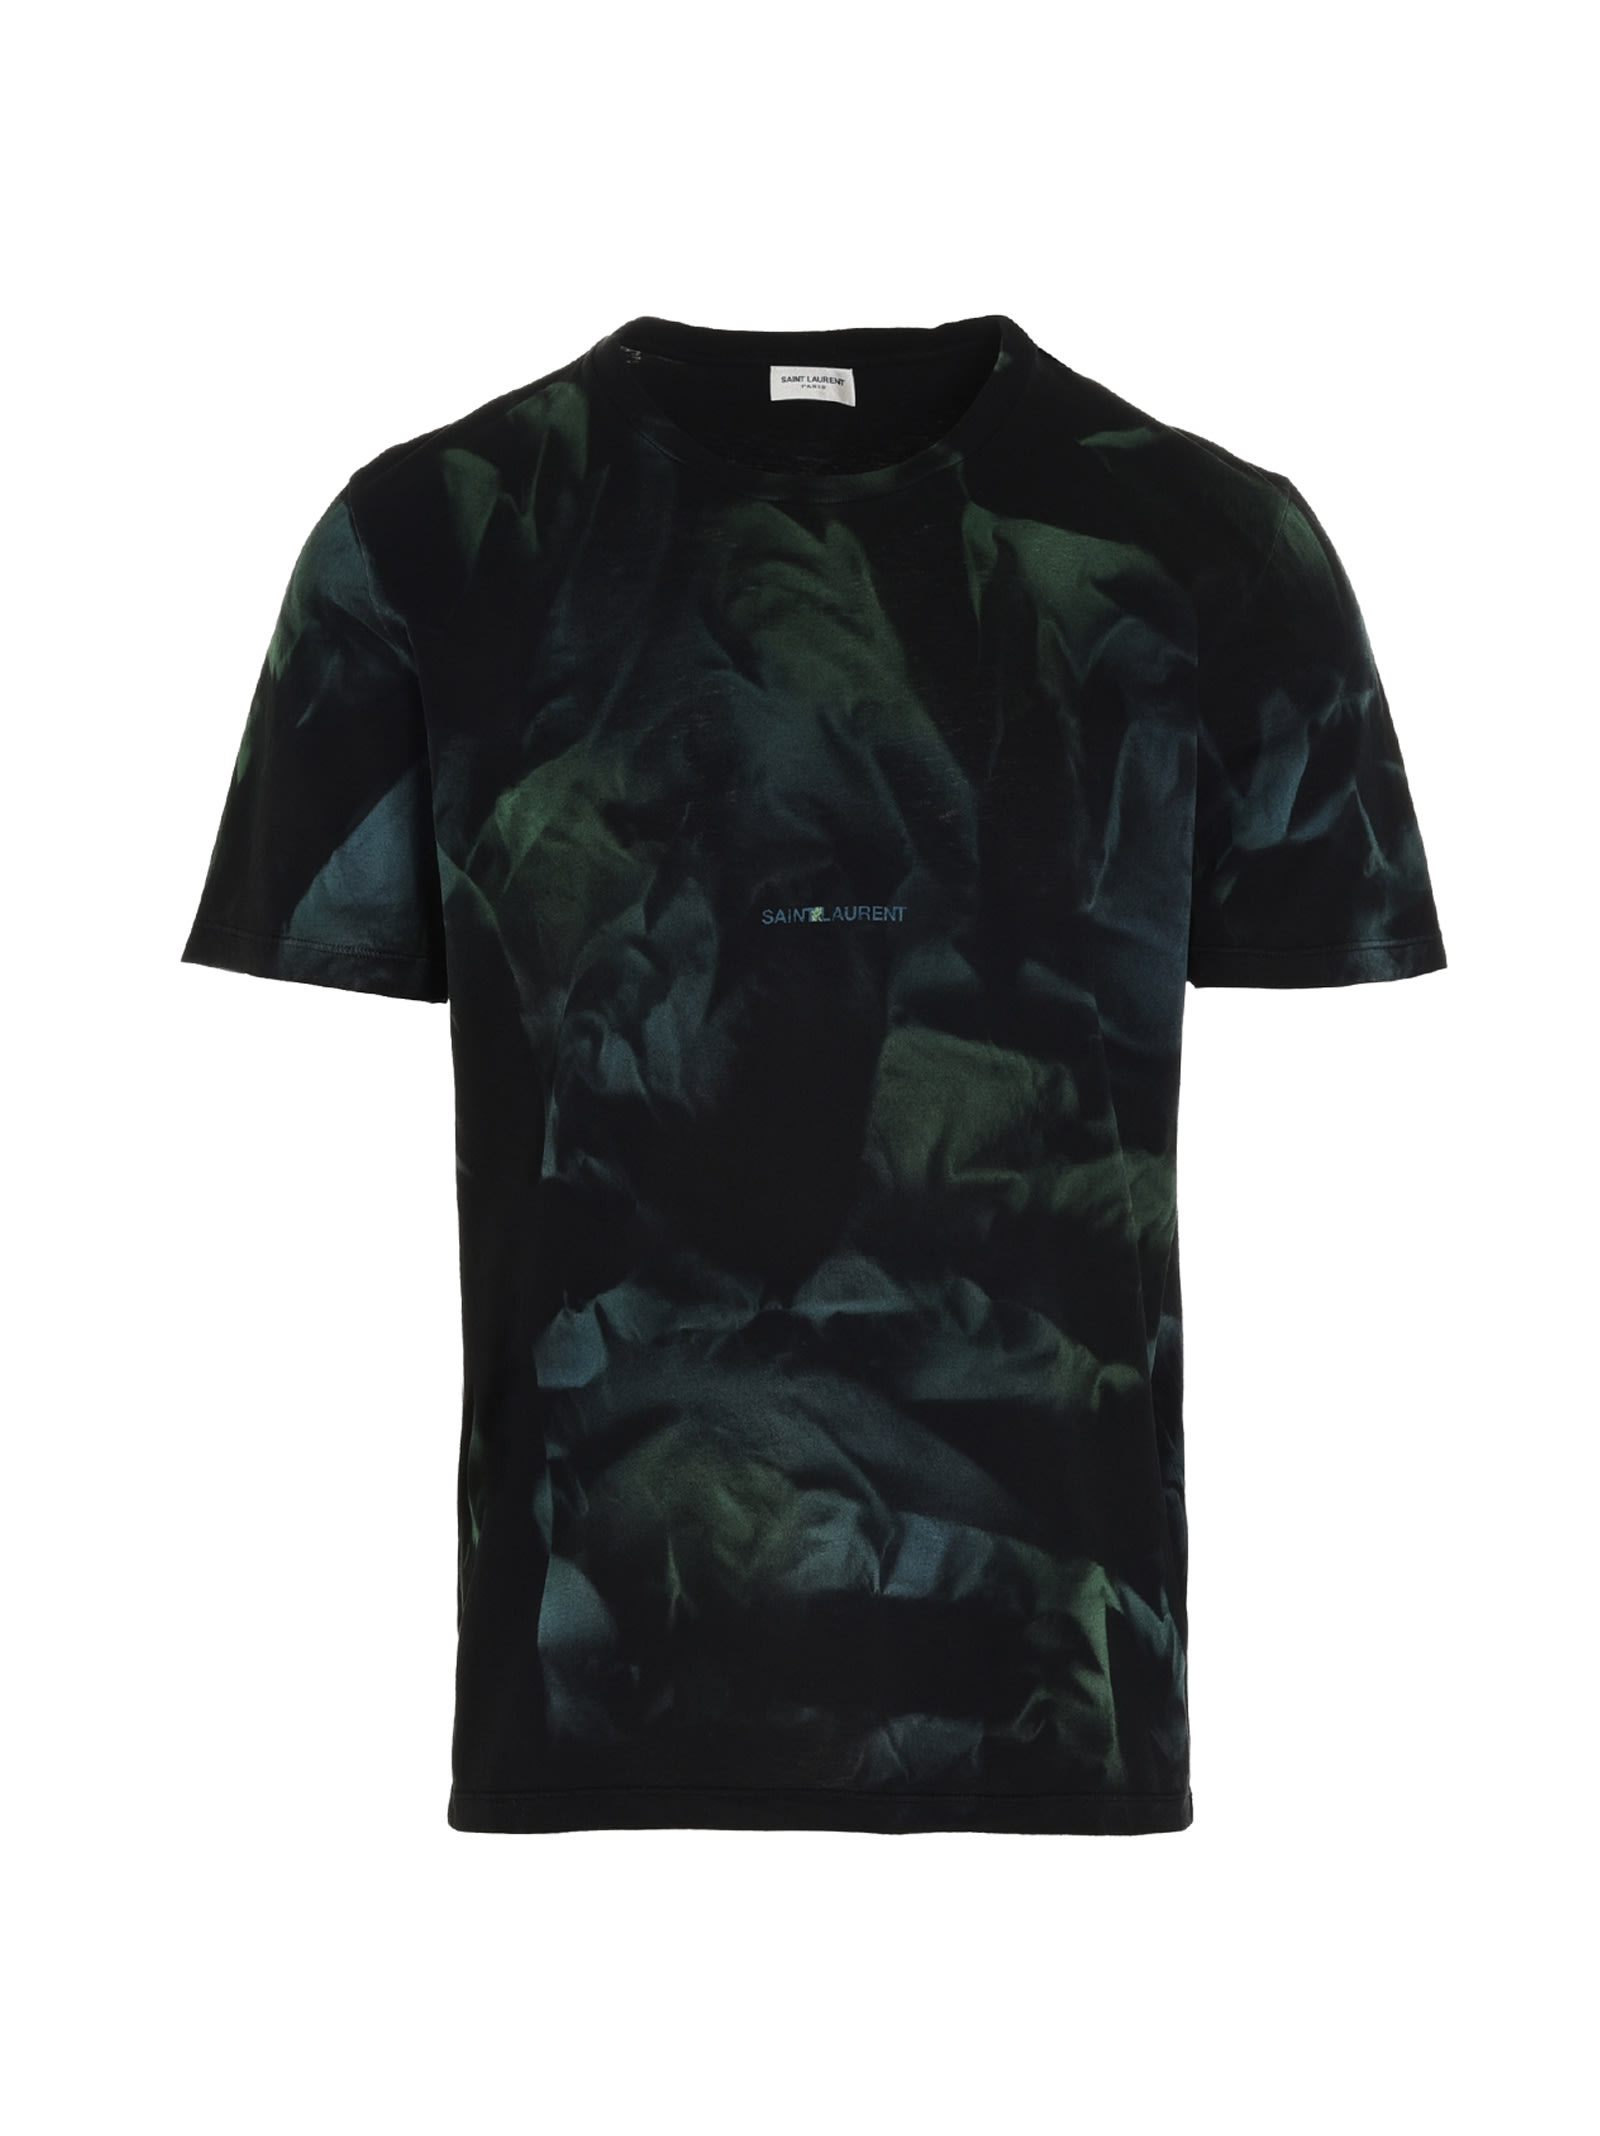 Saint Laurent jungle T-shirt